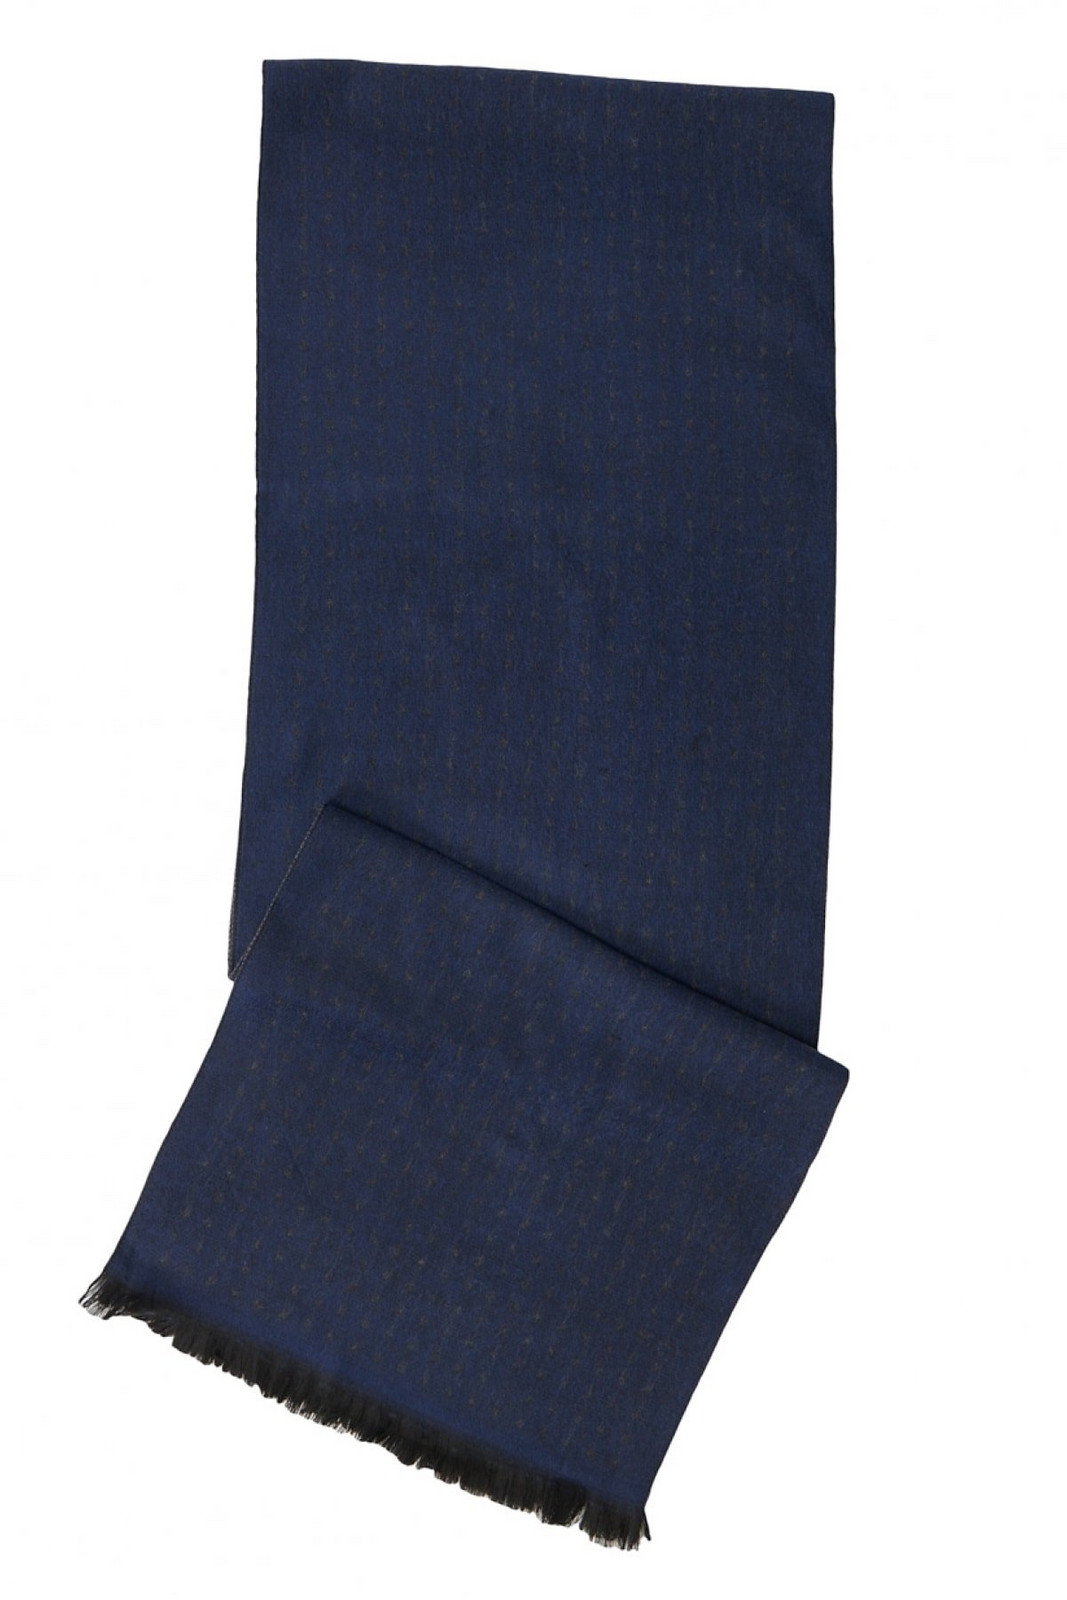 ALTINYILDIZ CLASSICS Men's Navy Blue-Grey Gray-Navy Blue Patterned Knitted Scarf